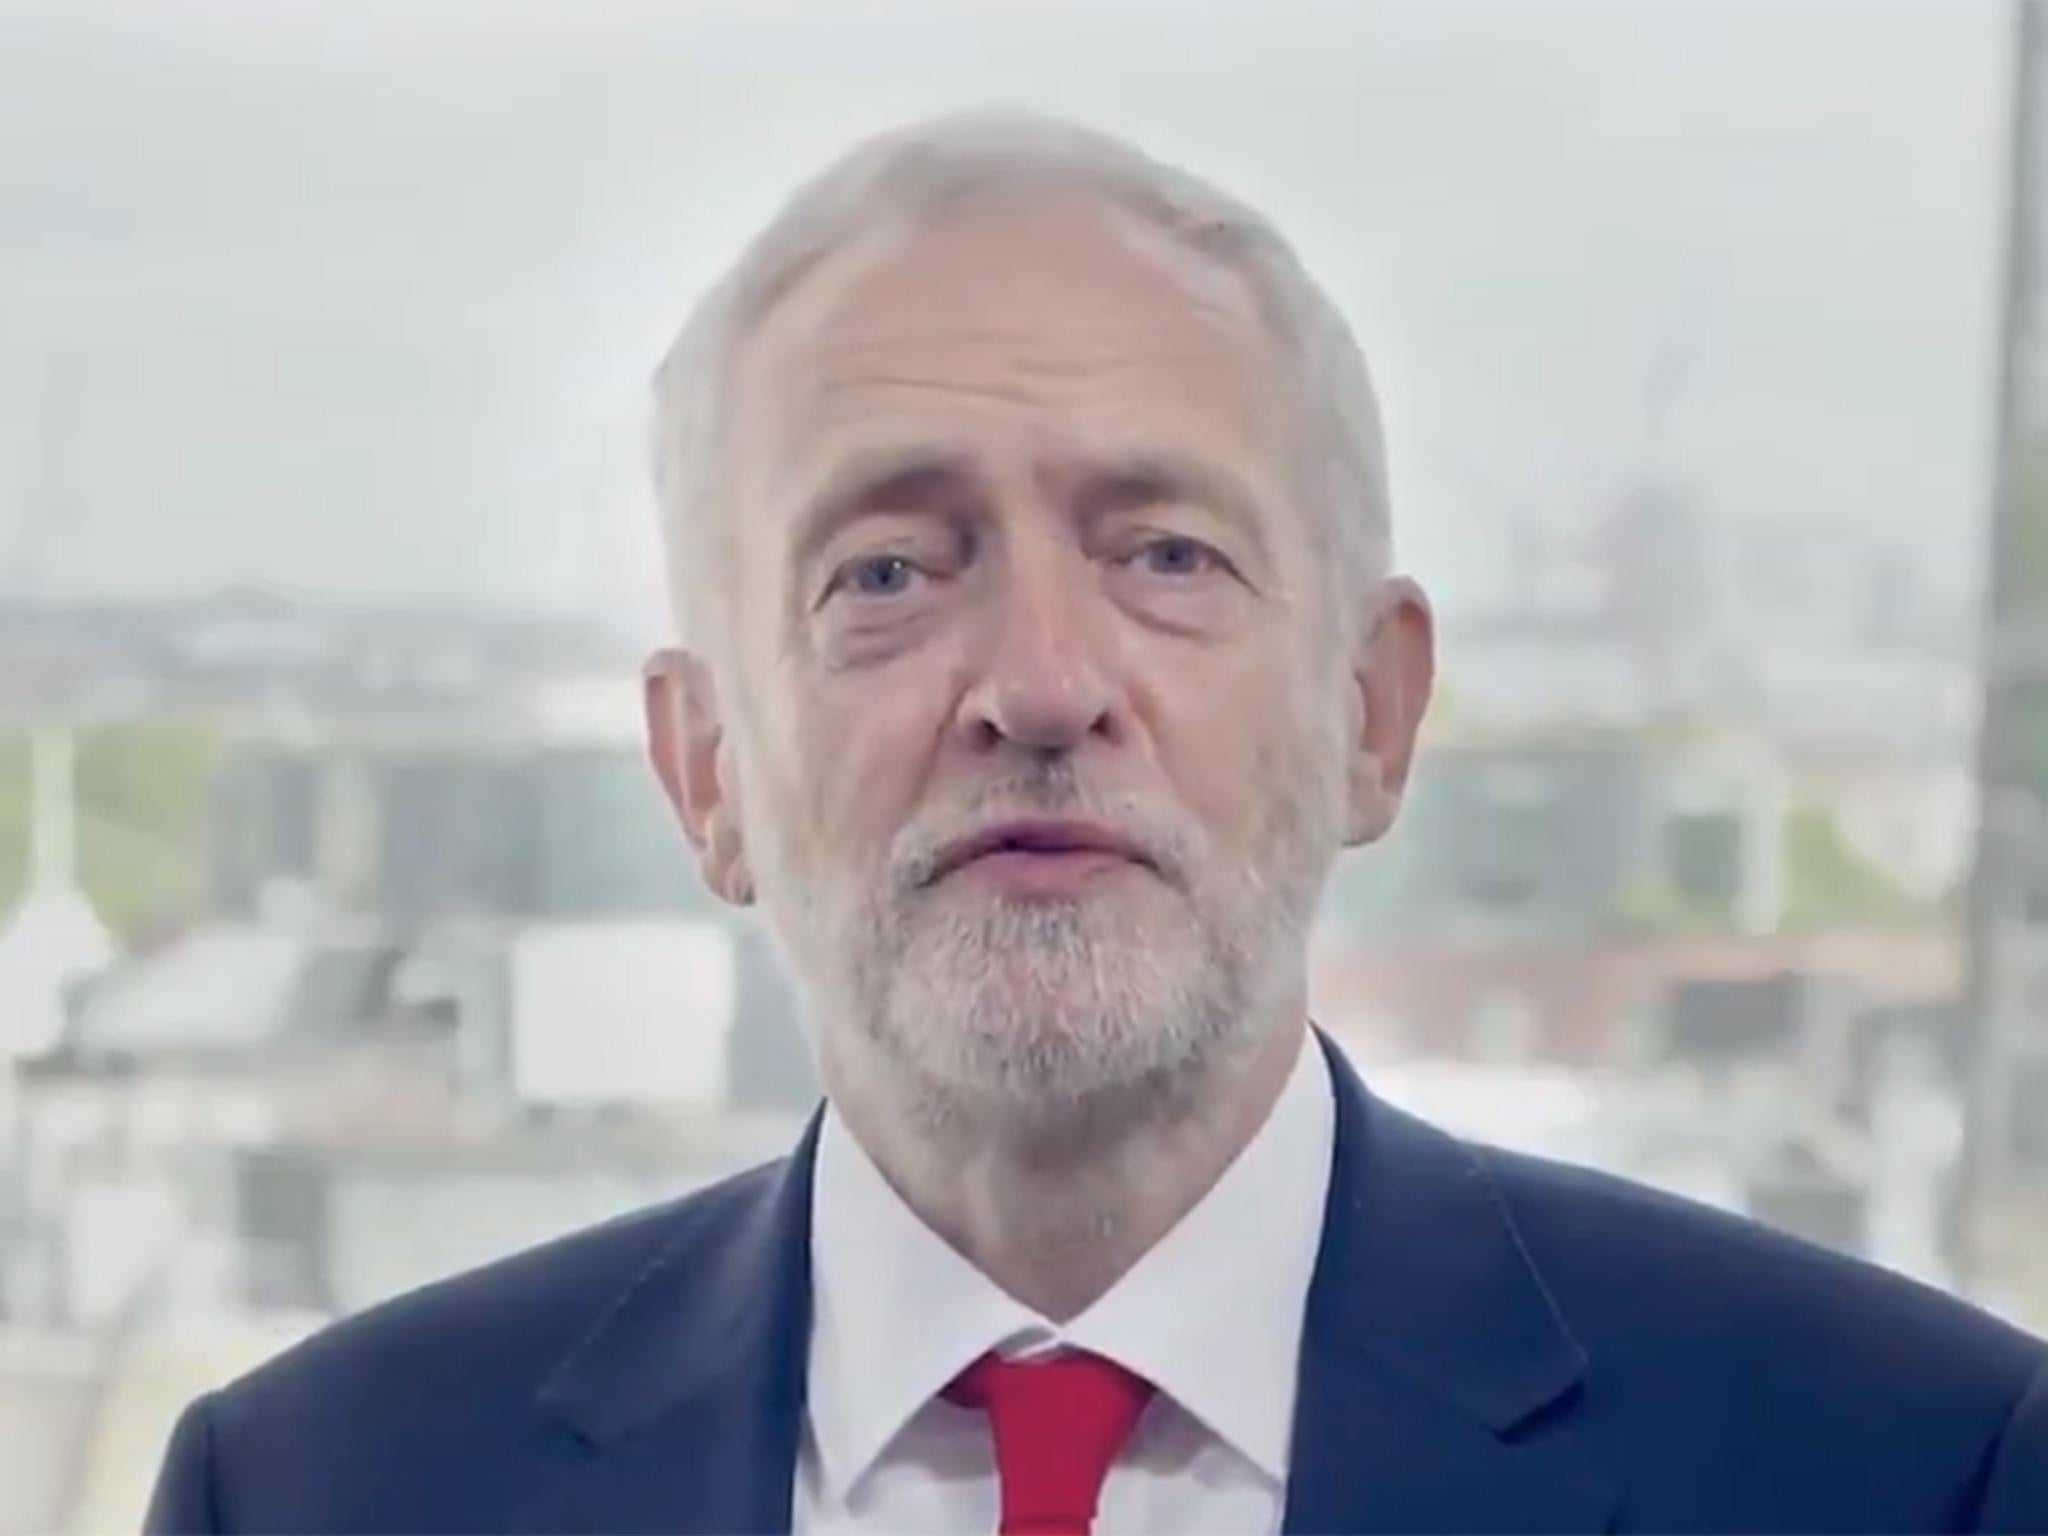 Jeremy Corbyn has taken to social media to upload the video